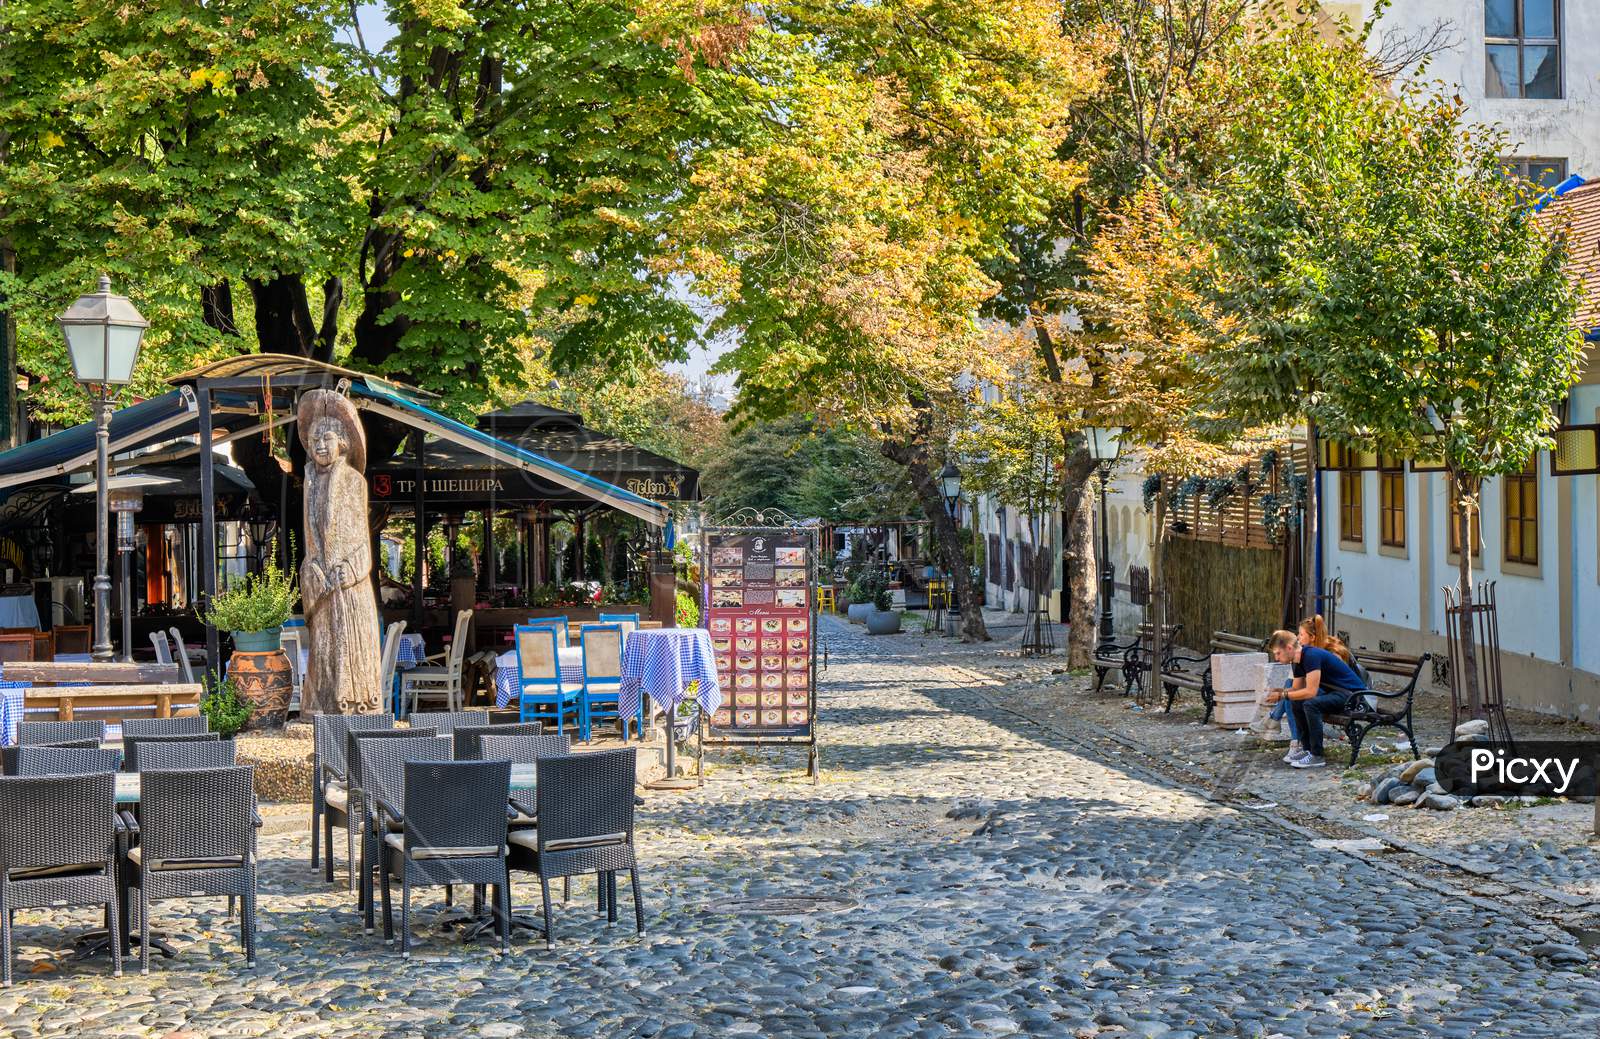 Skadarlija Old Bohemian Street With Many Restaurants In Belgrade Serbia